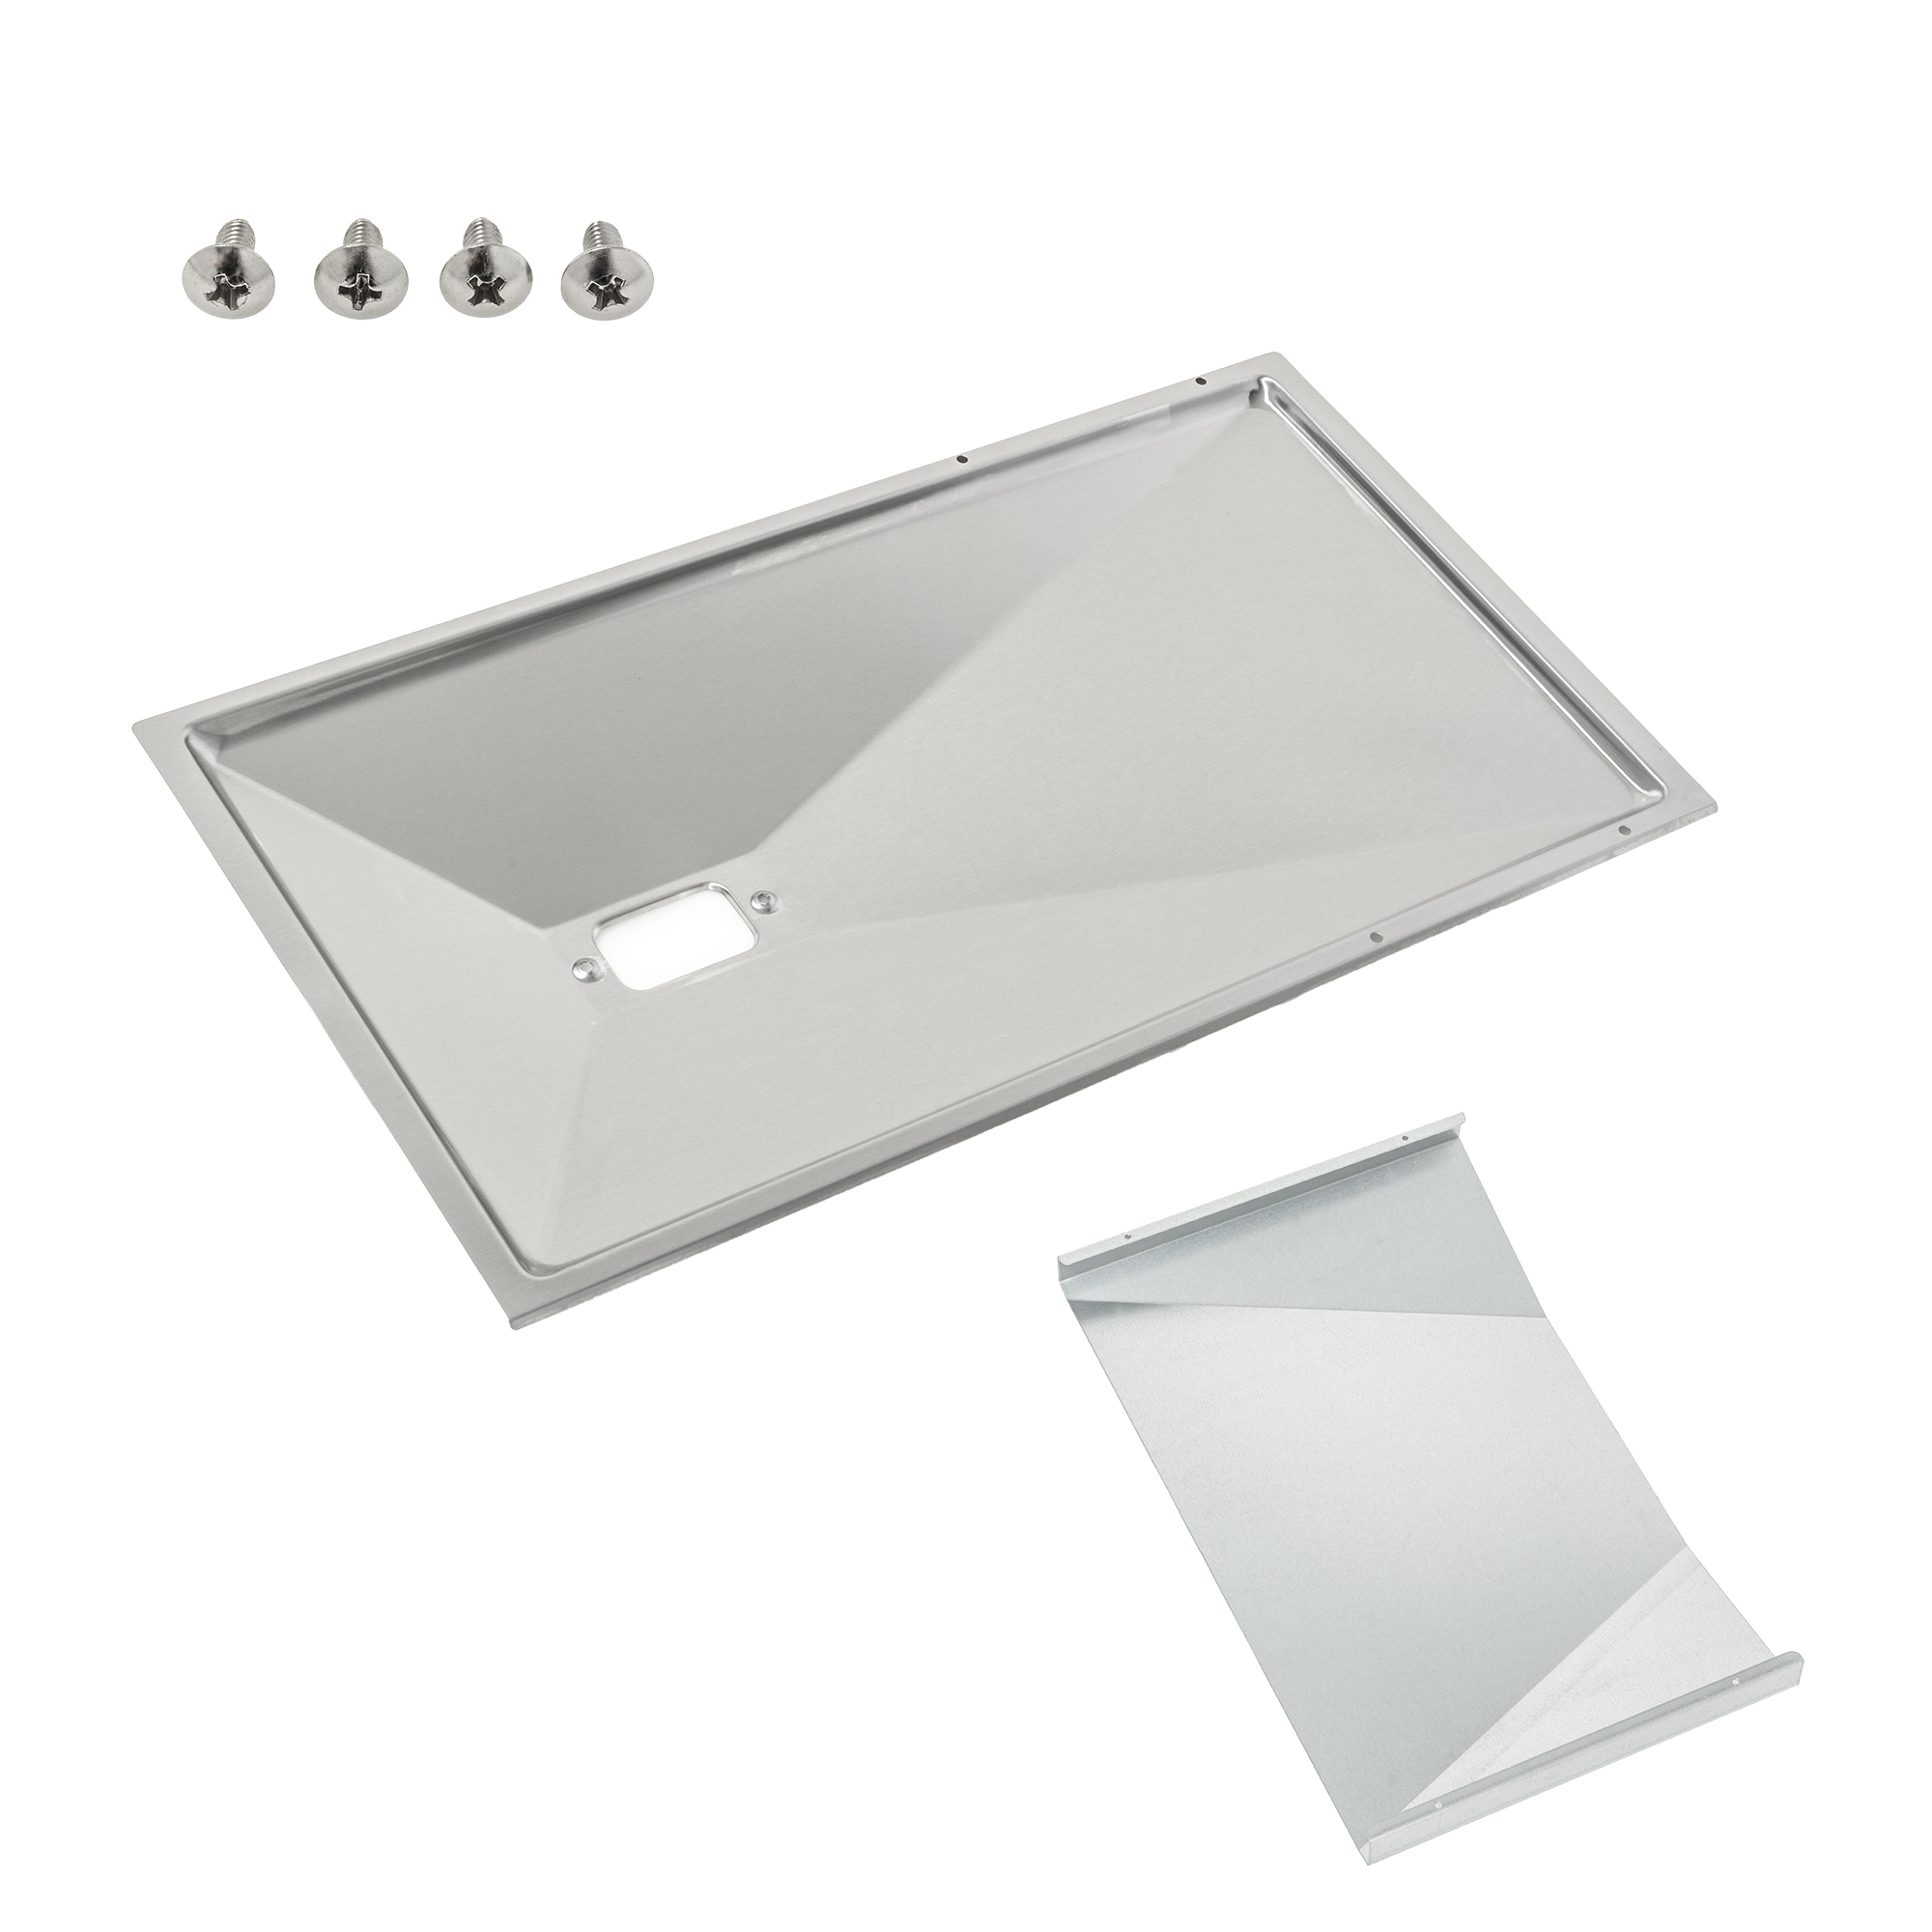 Grease tray Videro G3/G3-S stainless steel - w. heat insulation board (galvanized steel)